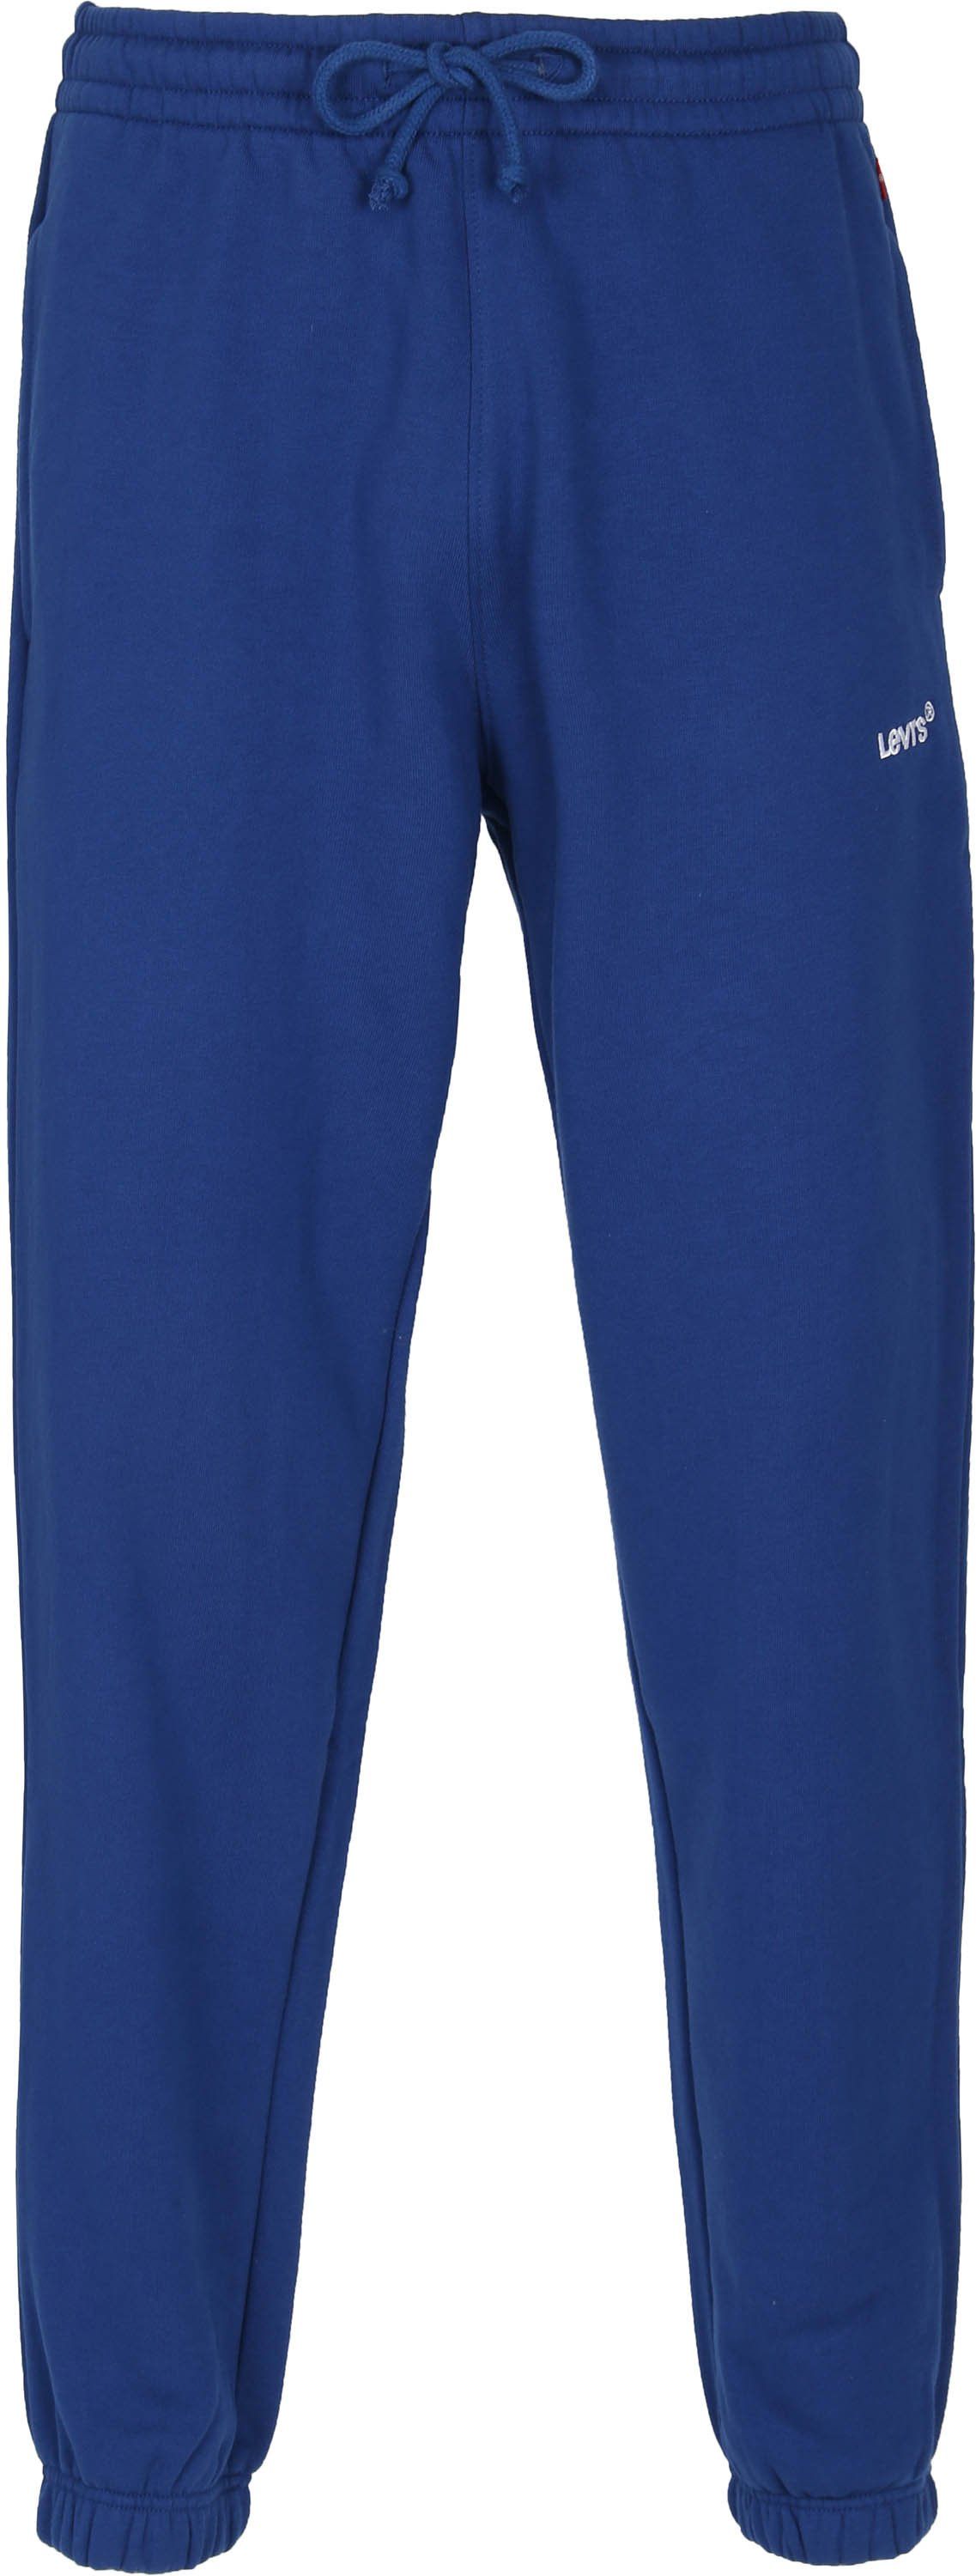 Levi's Sweatpants Garment Dye Navy Blue Dark Blue size M